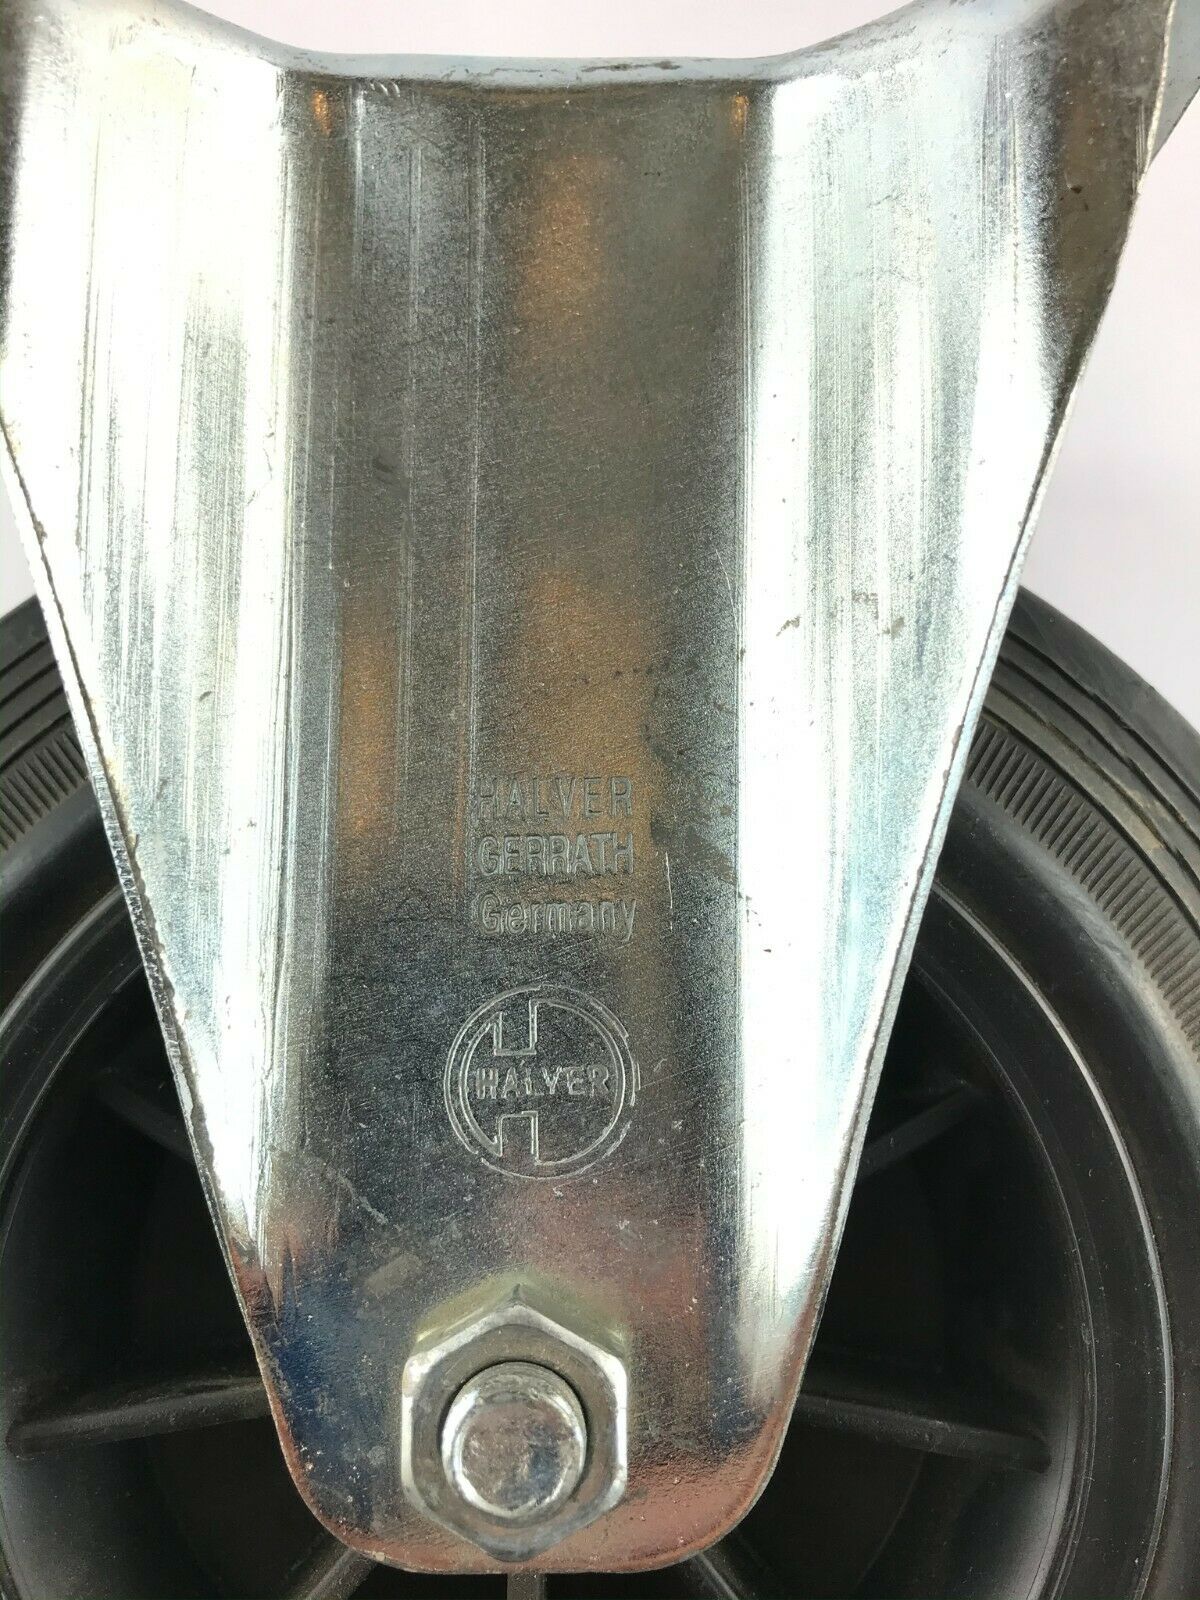 Heavy Duty Fixed Caster Rubber Wheel Needle Bearing 8 Inch 20 cm Halver Gerrath